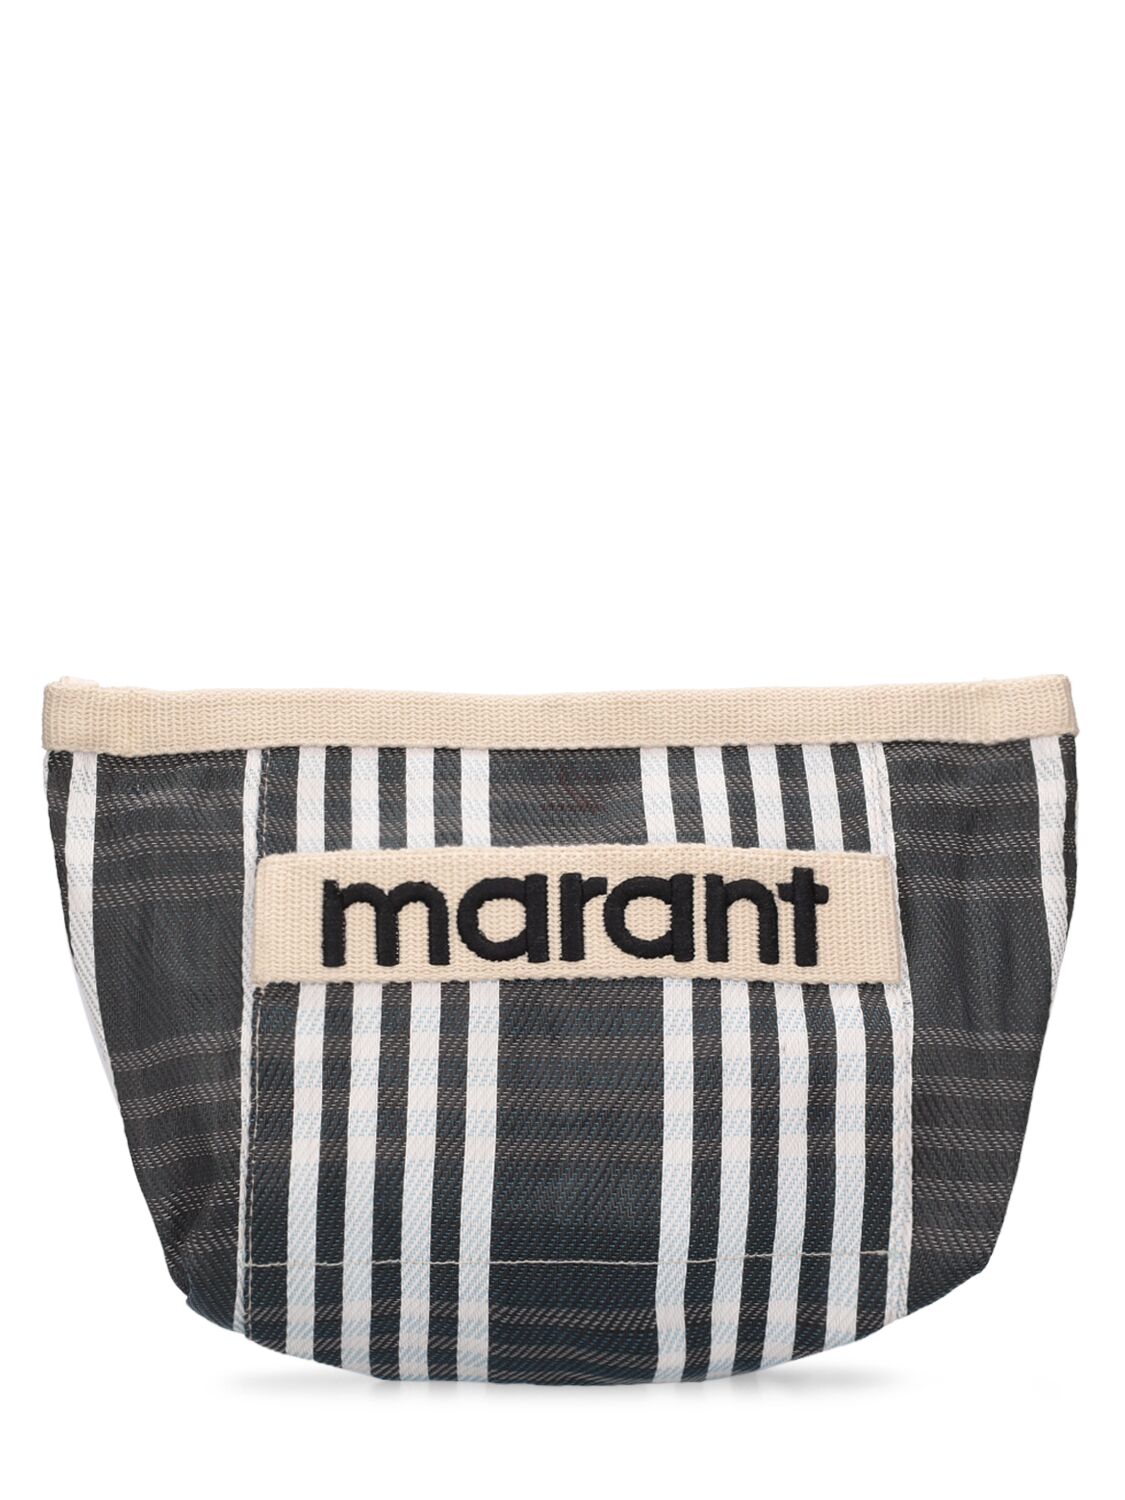 Isabel Marant Powden Striped Nylon Clutch In Multicolour